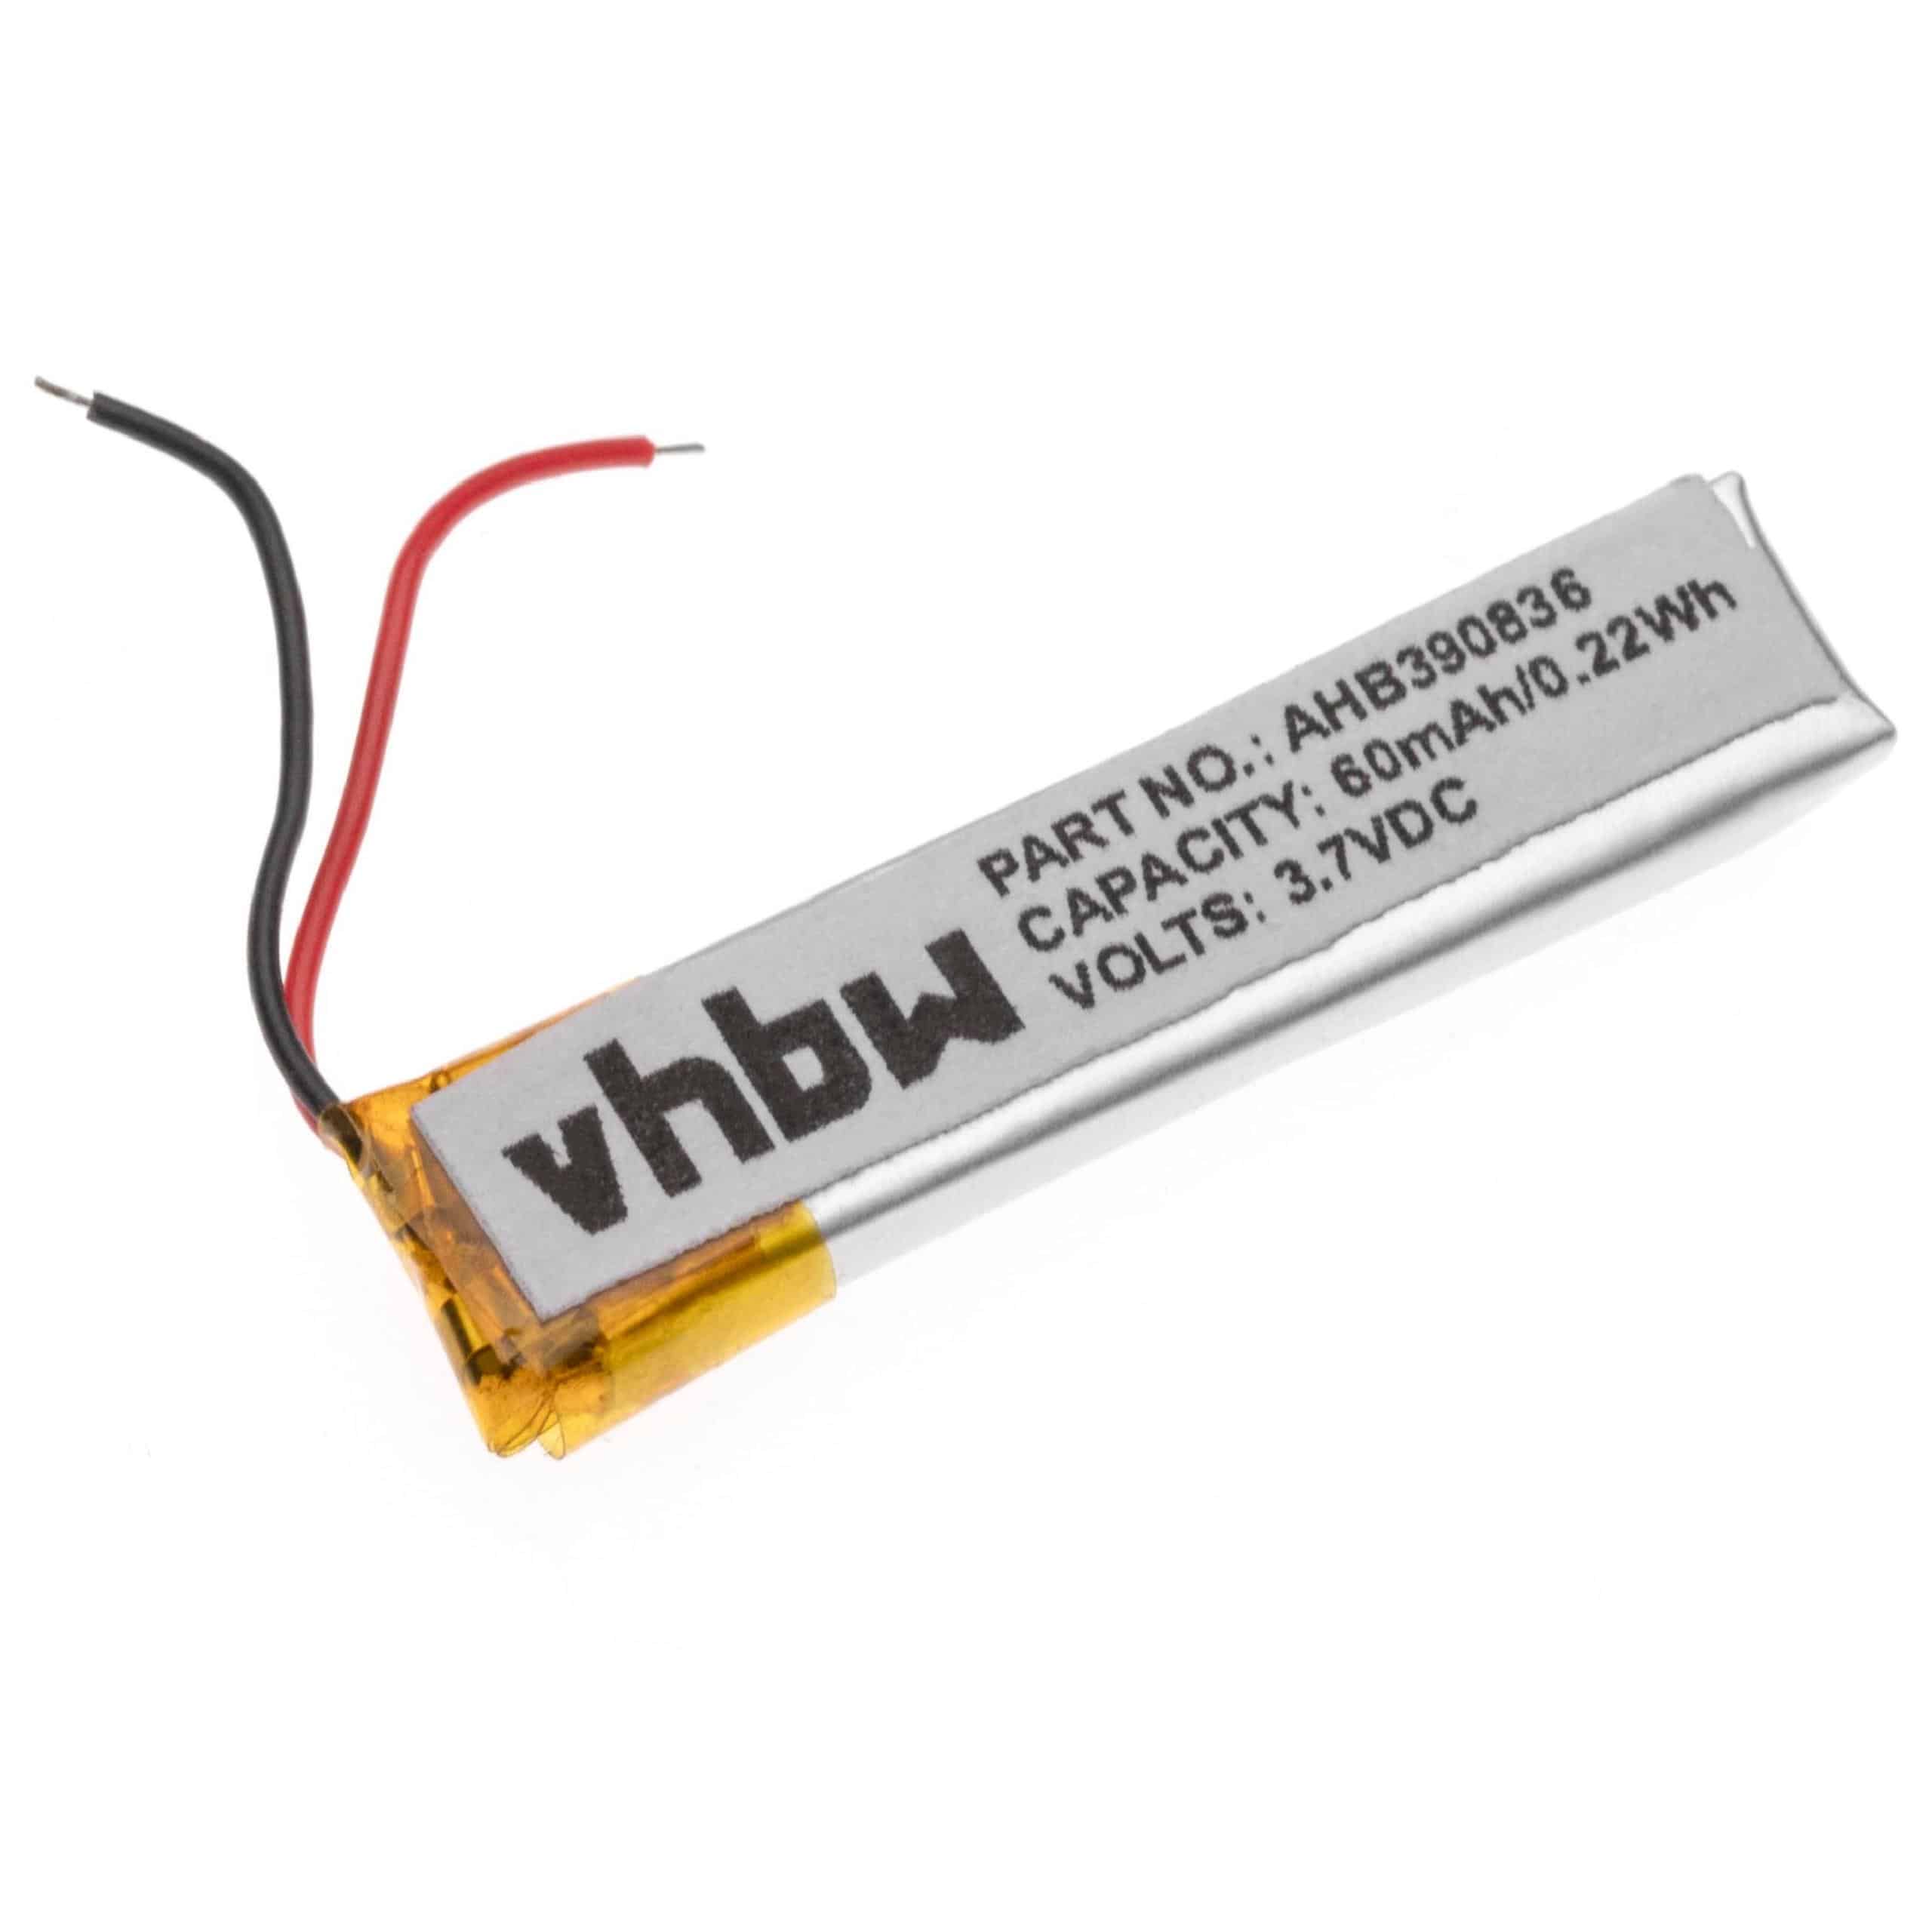 Akumulator do słuchawek bezprzewodowych zamiennik Jabra CPL-556, B350735, AHB390836, HS-11 - 60 mAh 3,7 V LiPo